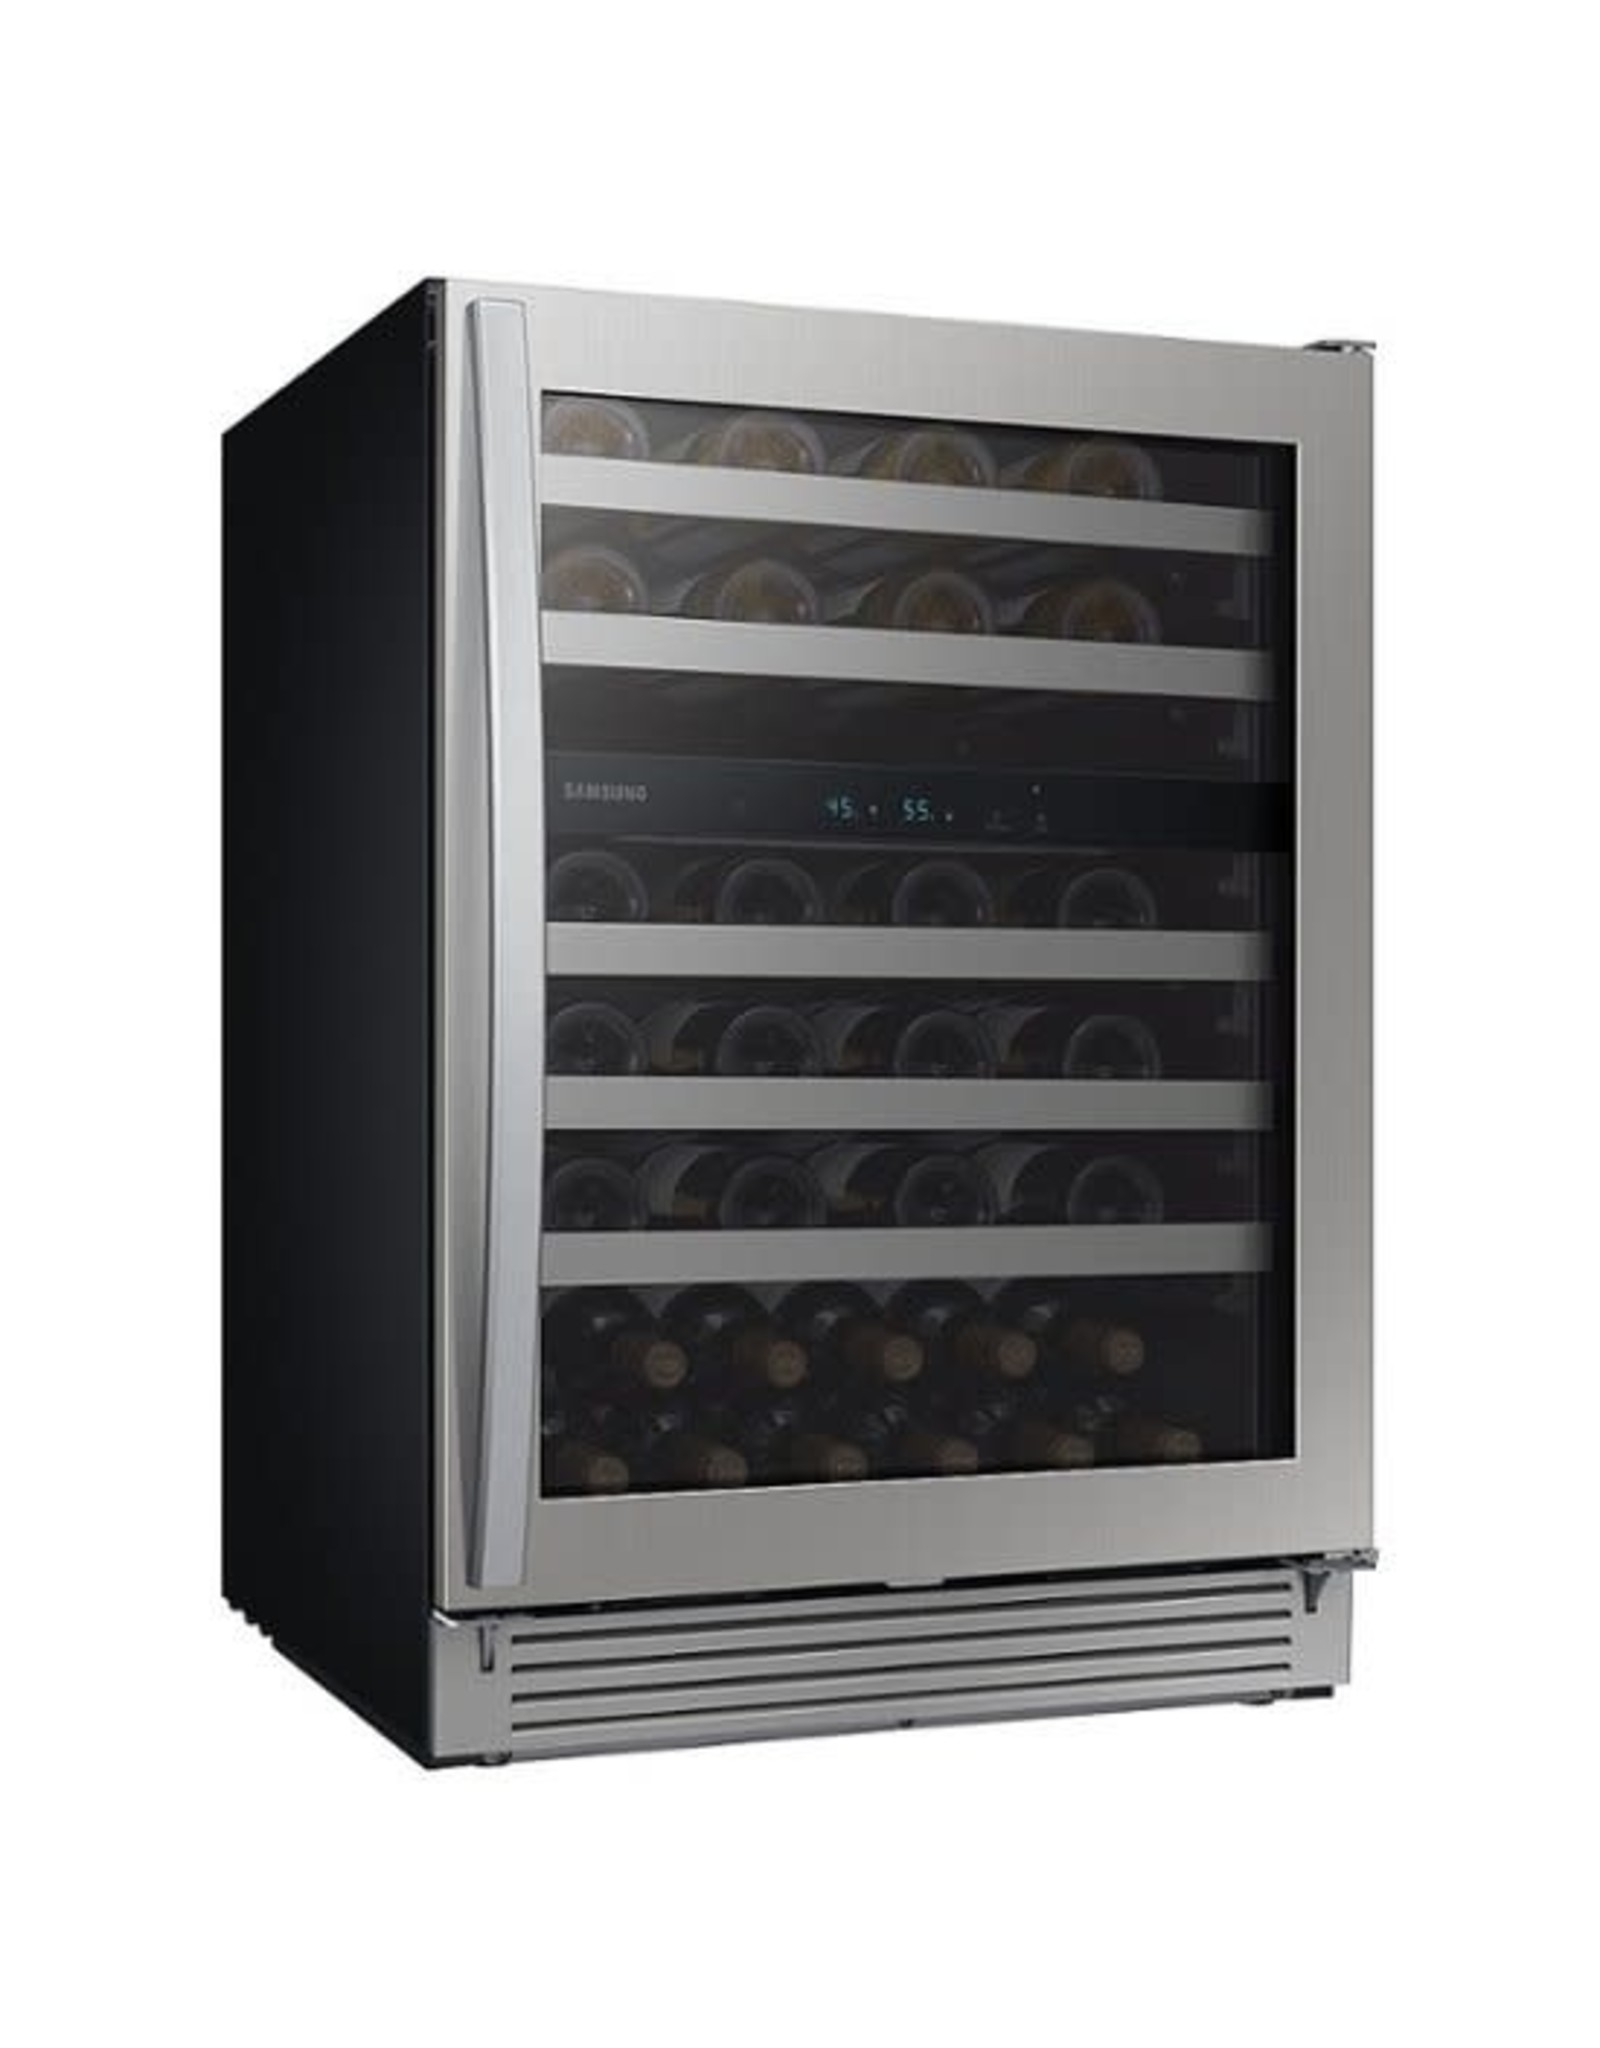 RW51TS338SR Samsung – 51-Bottle Capacity Wine Cooler – Stainless steel